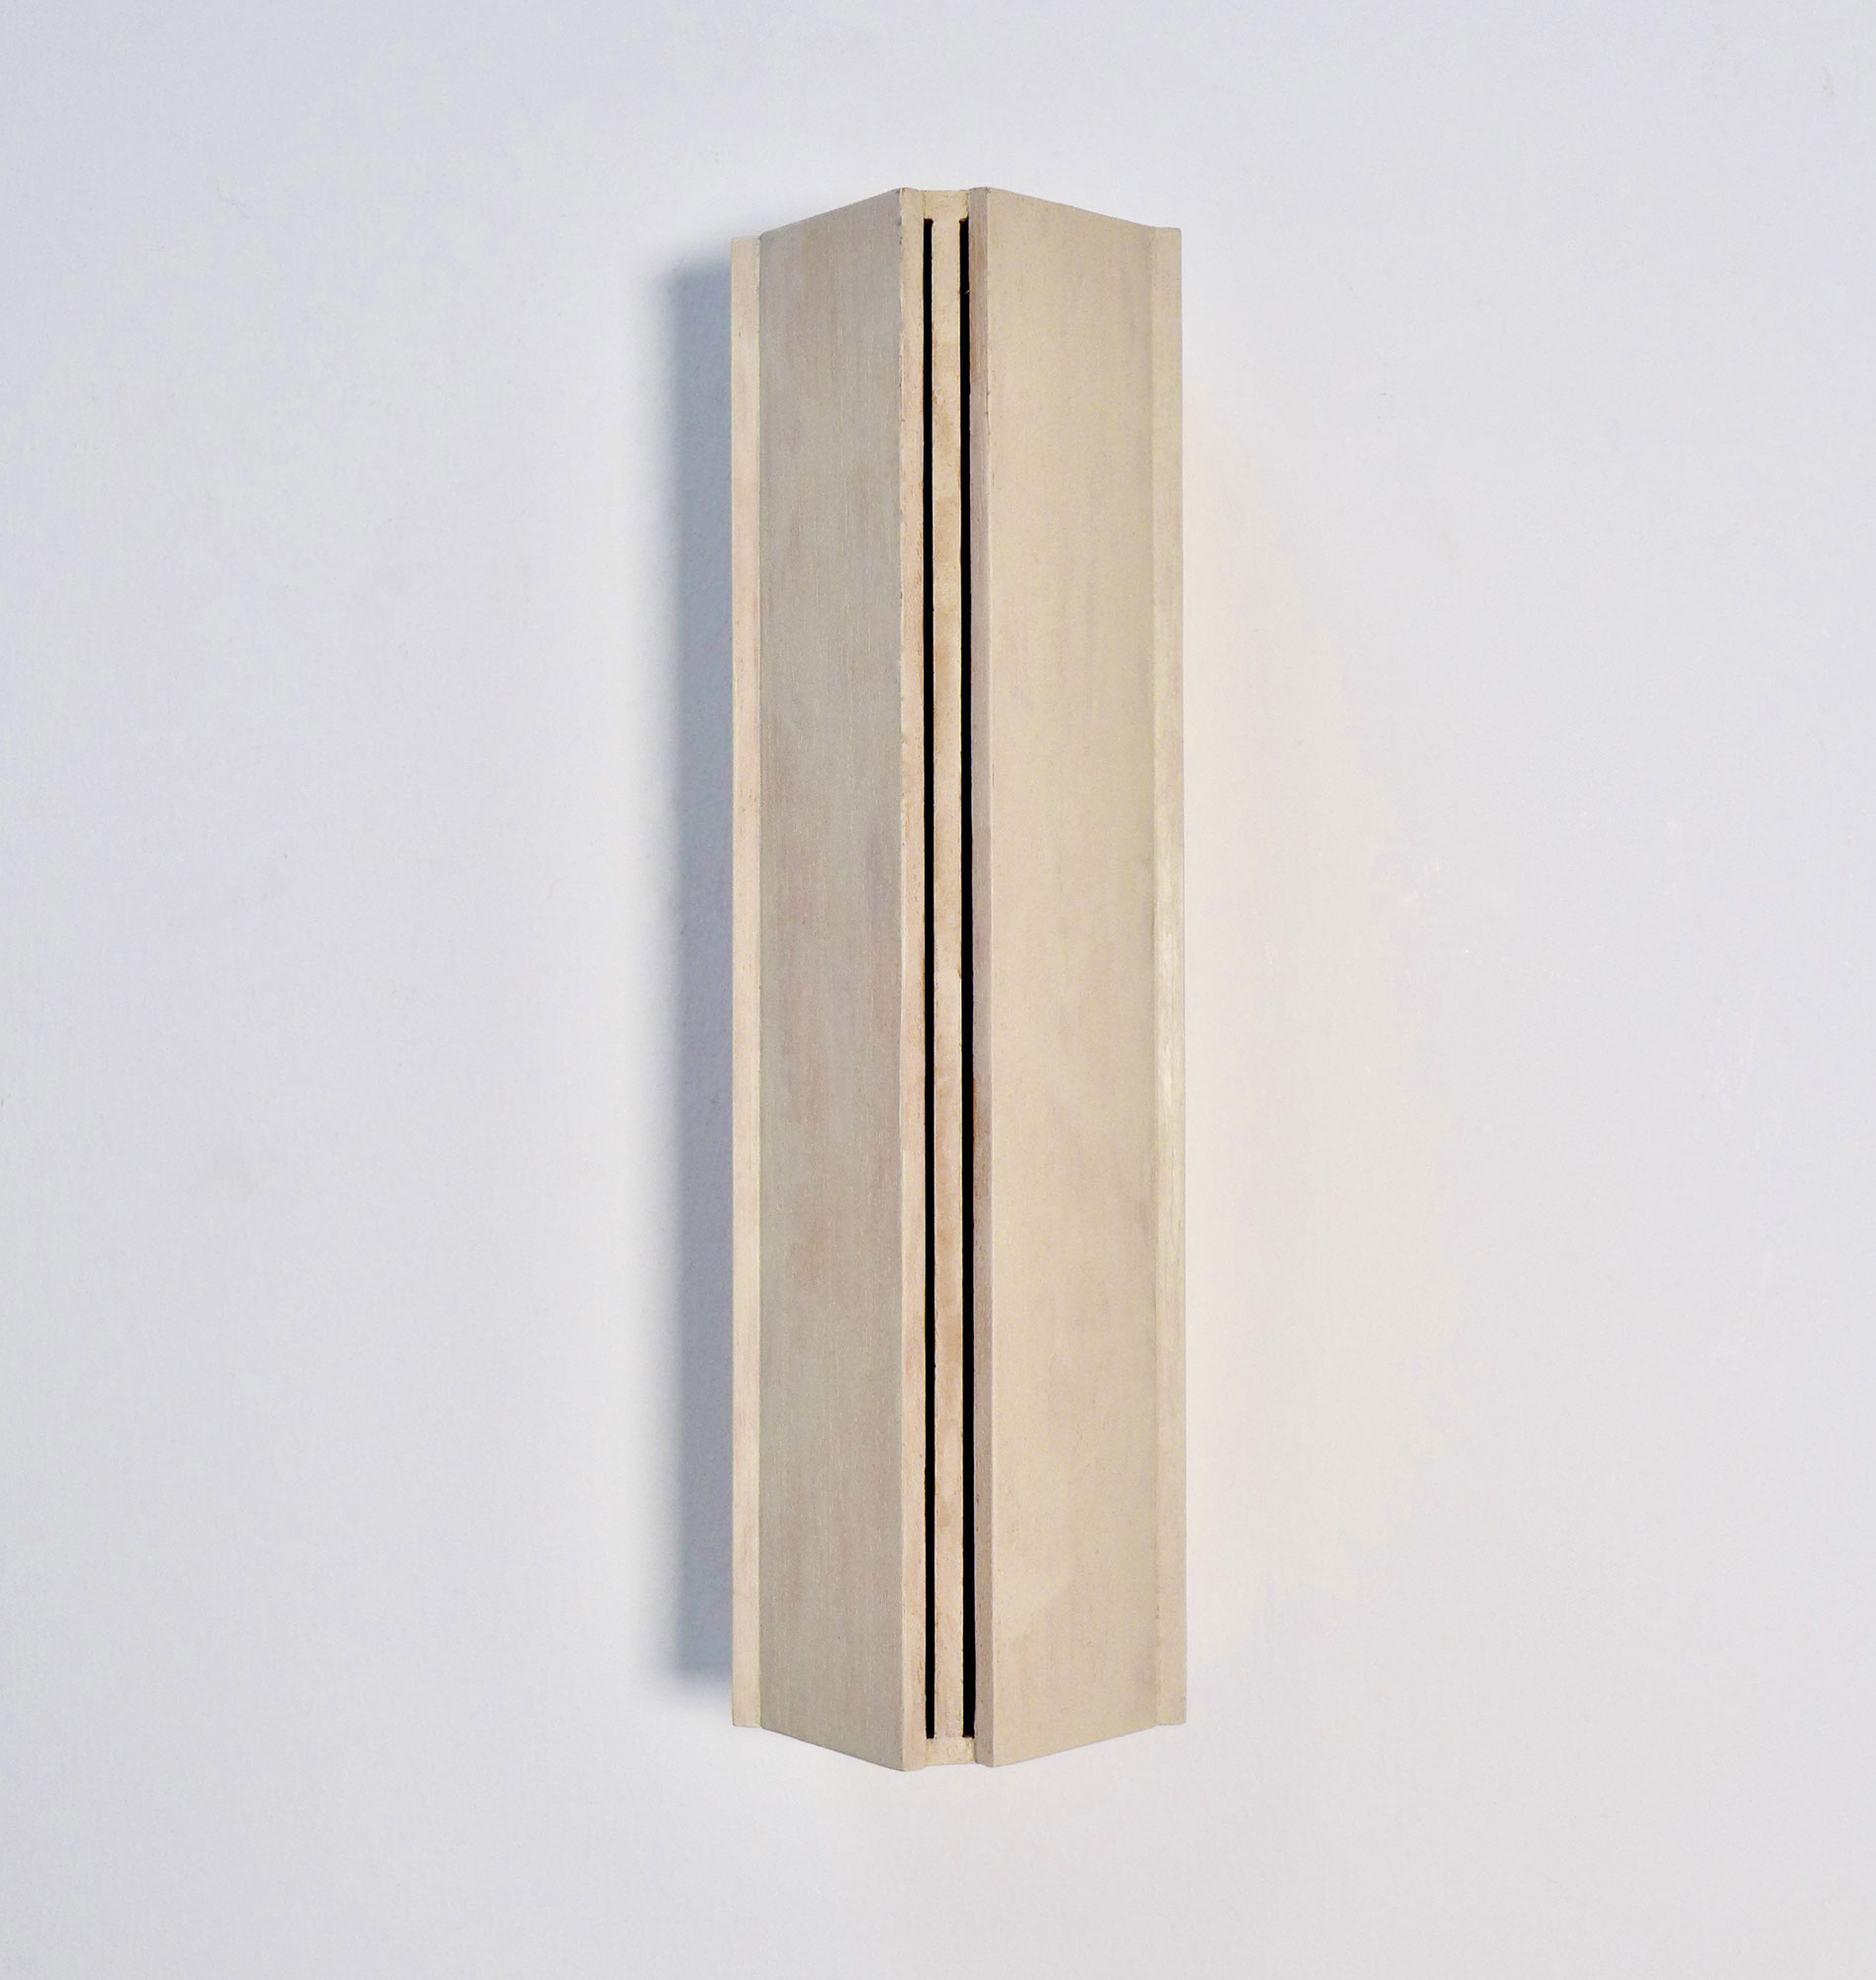 Kenneth Dingwall, Discreet, 2009, acrylic on basswood, 30.4cm x 8.2cm x 10.5cm